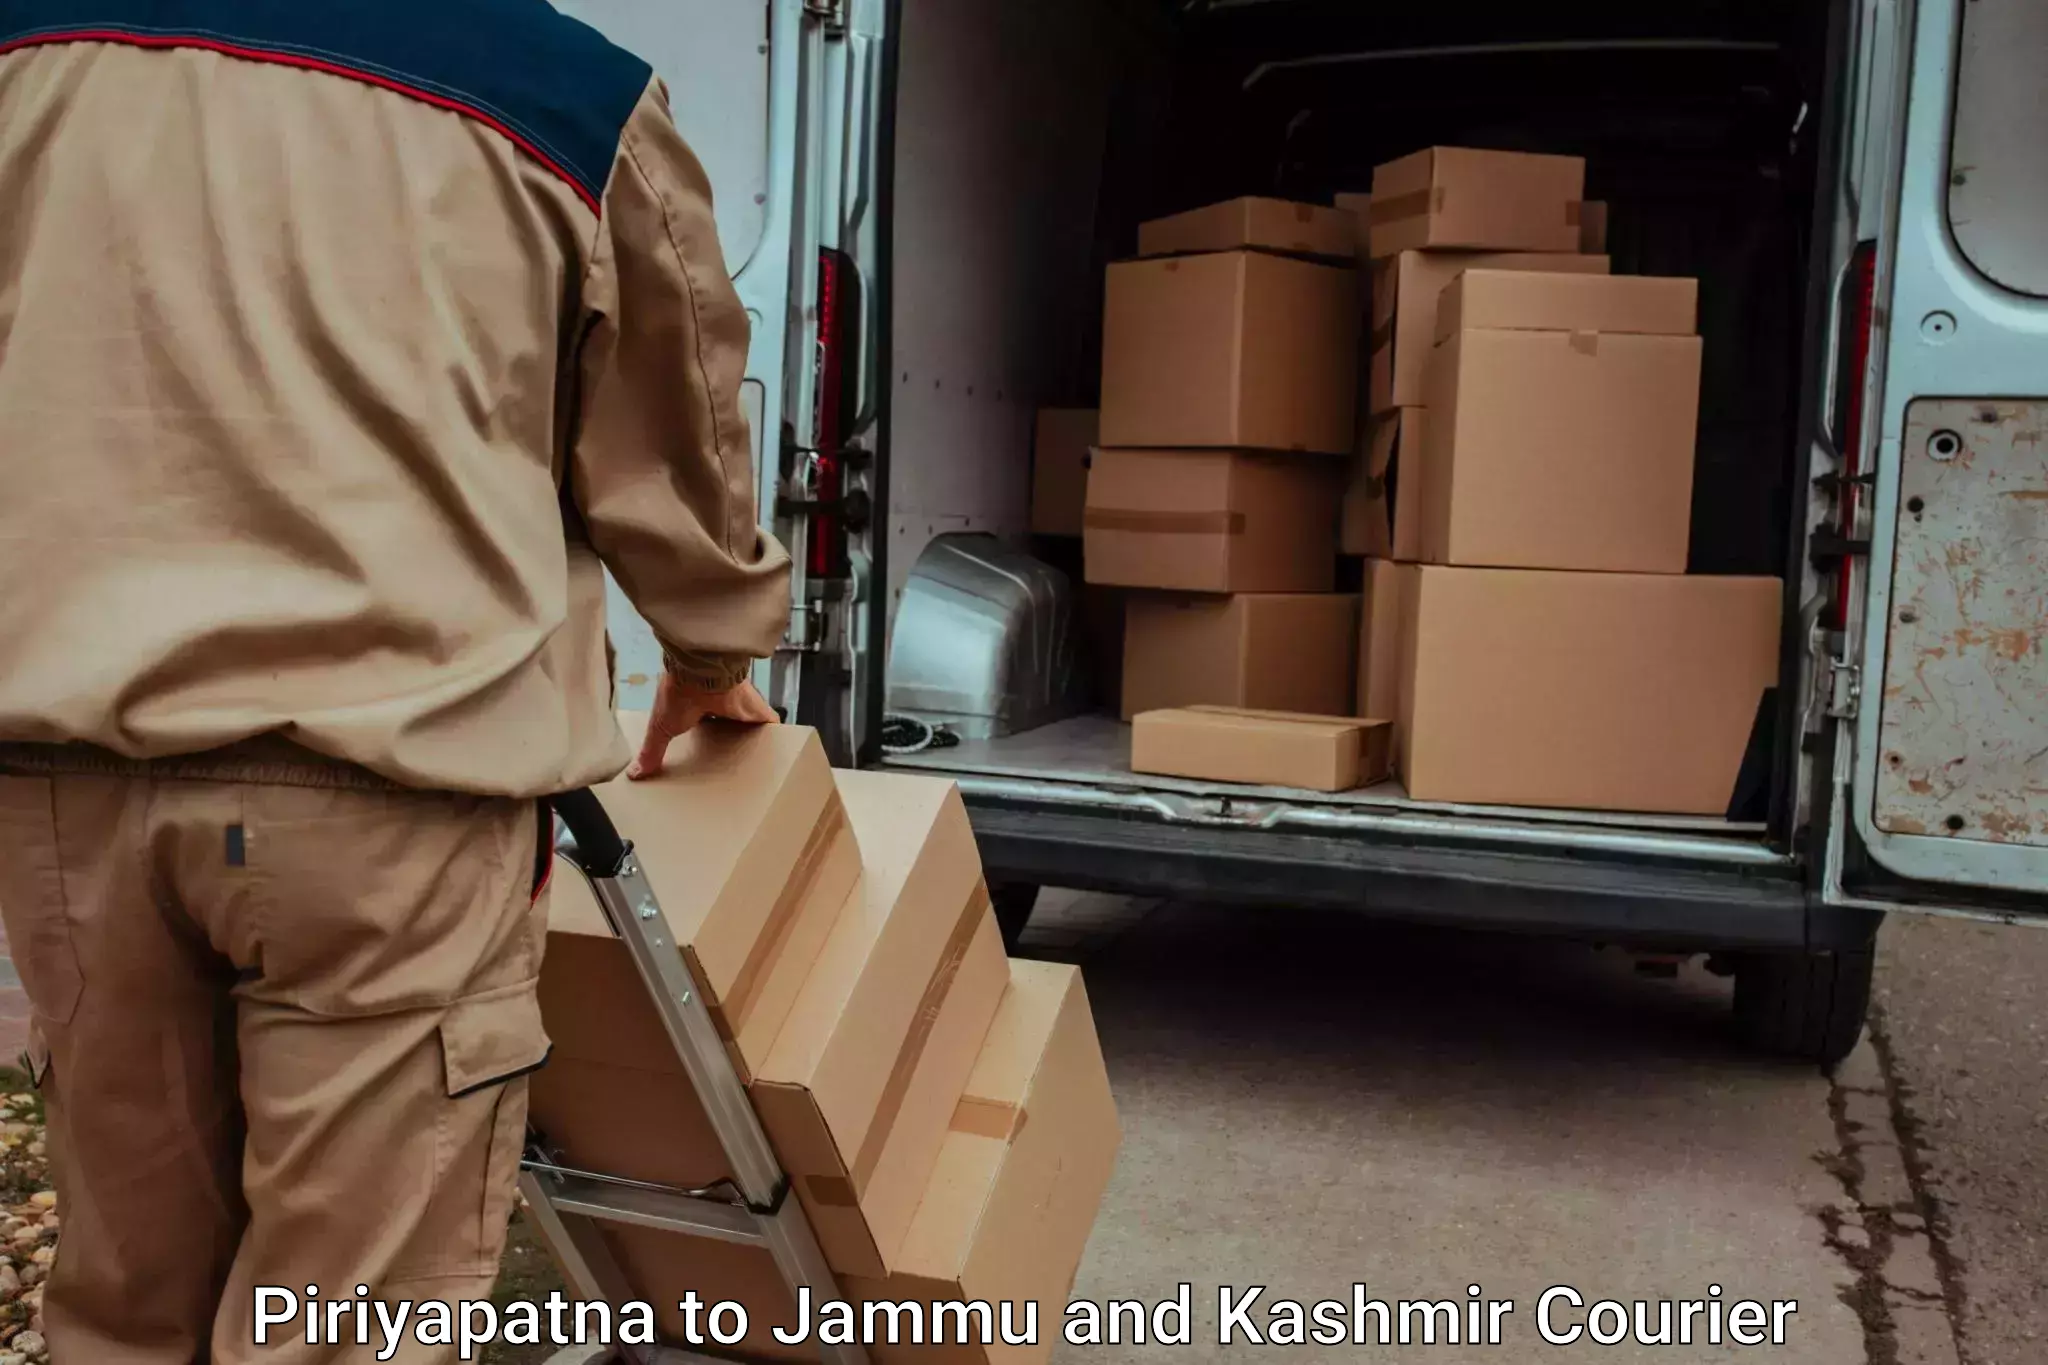 Holiday season luggage delivery Piriyapatna to Srinagar Kashmir